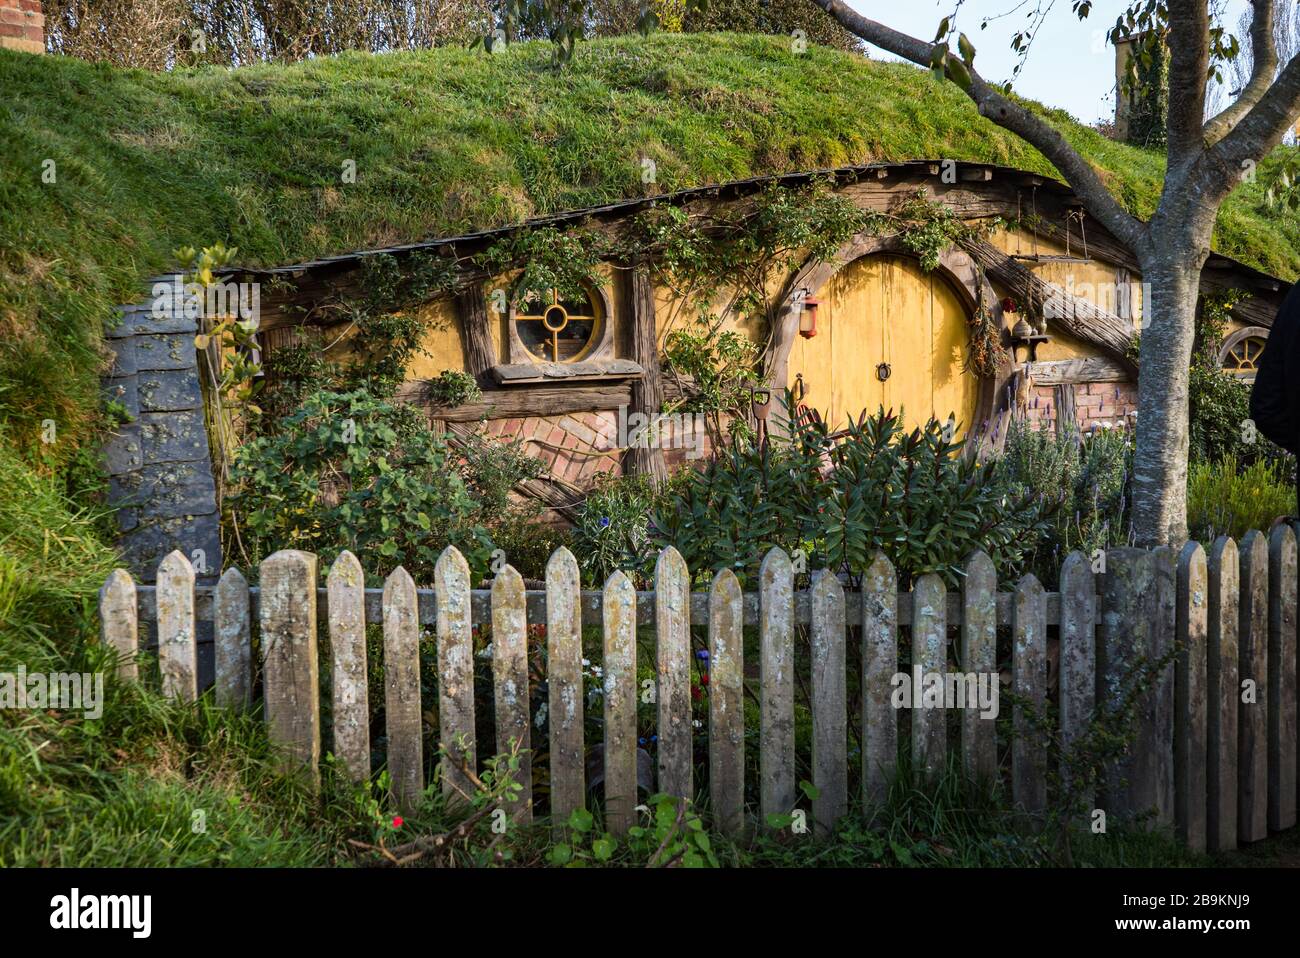 Evening light illuminates the round, yellow door of a hobbit hole at the Hobbiton Movie Set, New Zealand Stock Photo